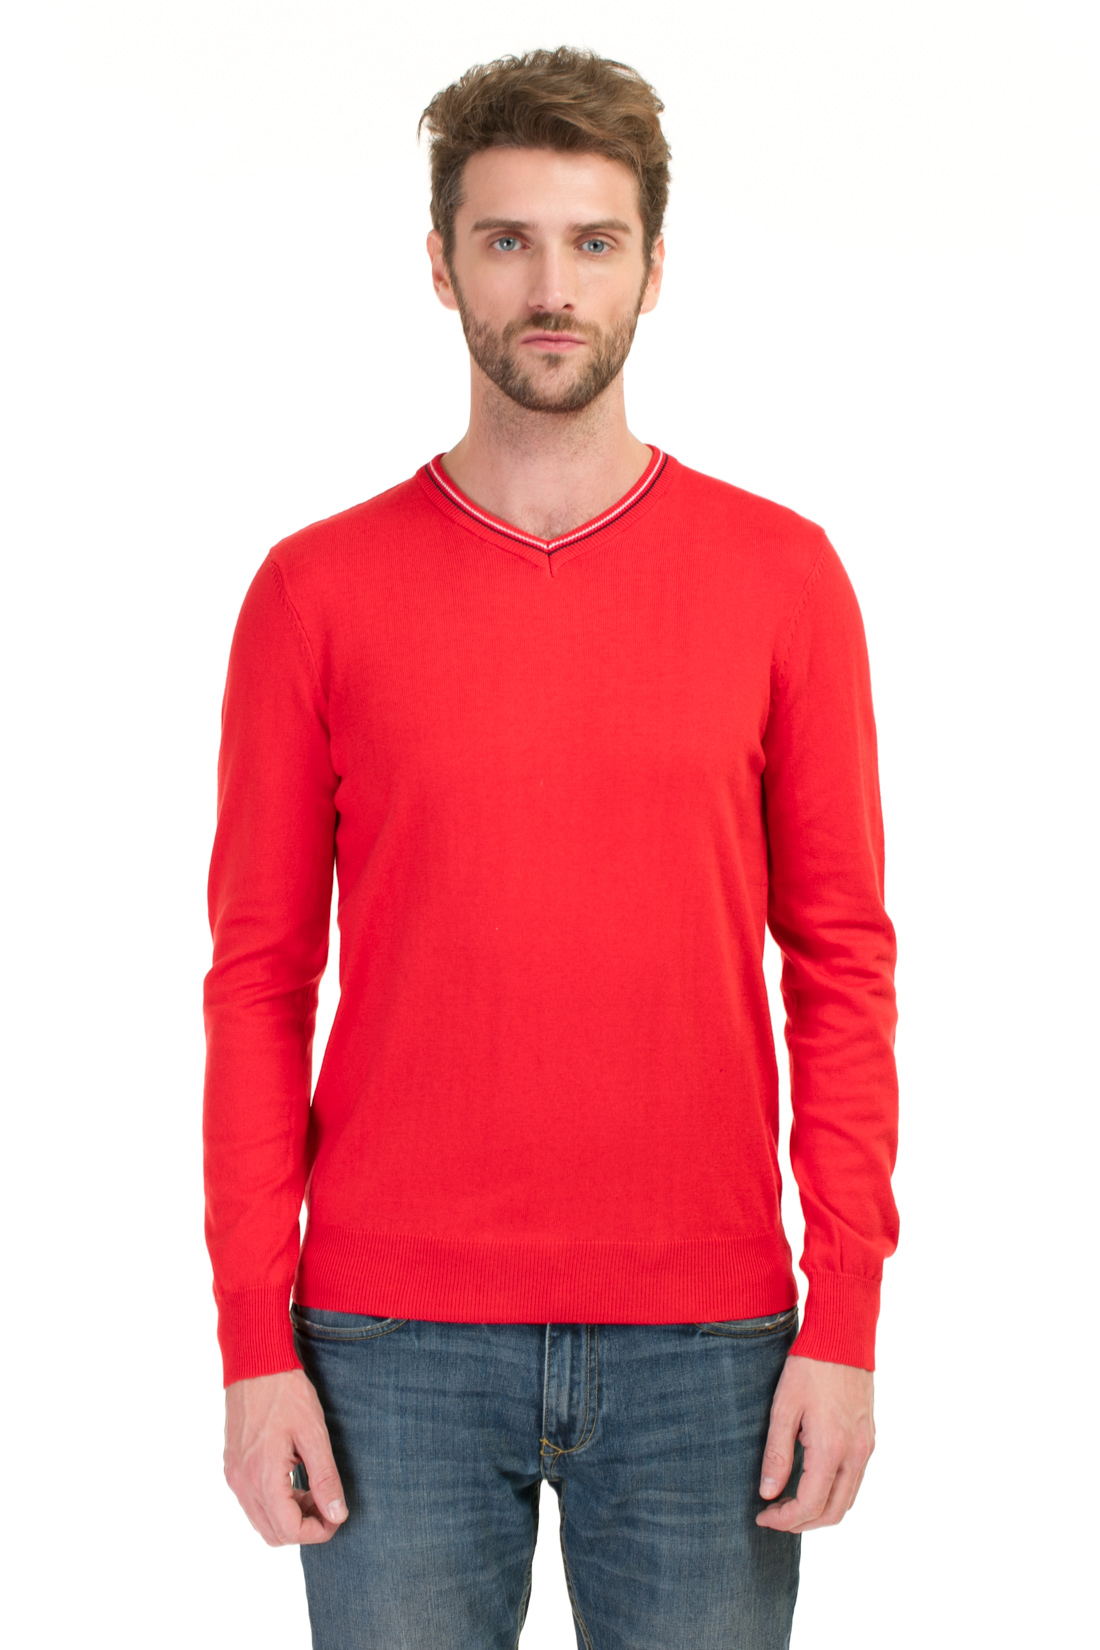 Пуловер с окантовкой на вырезе (арт. baon B637004), размер M, цвет красный Пуловер с окантовкой на вырезе (арт. baon B637004) - фото 1